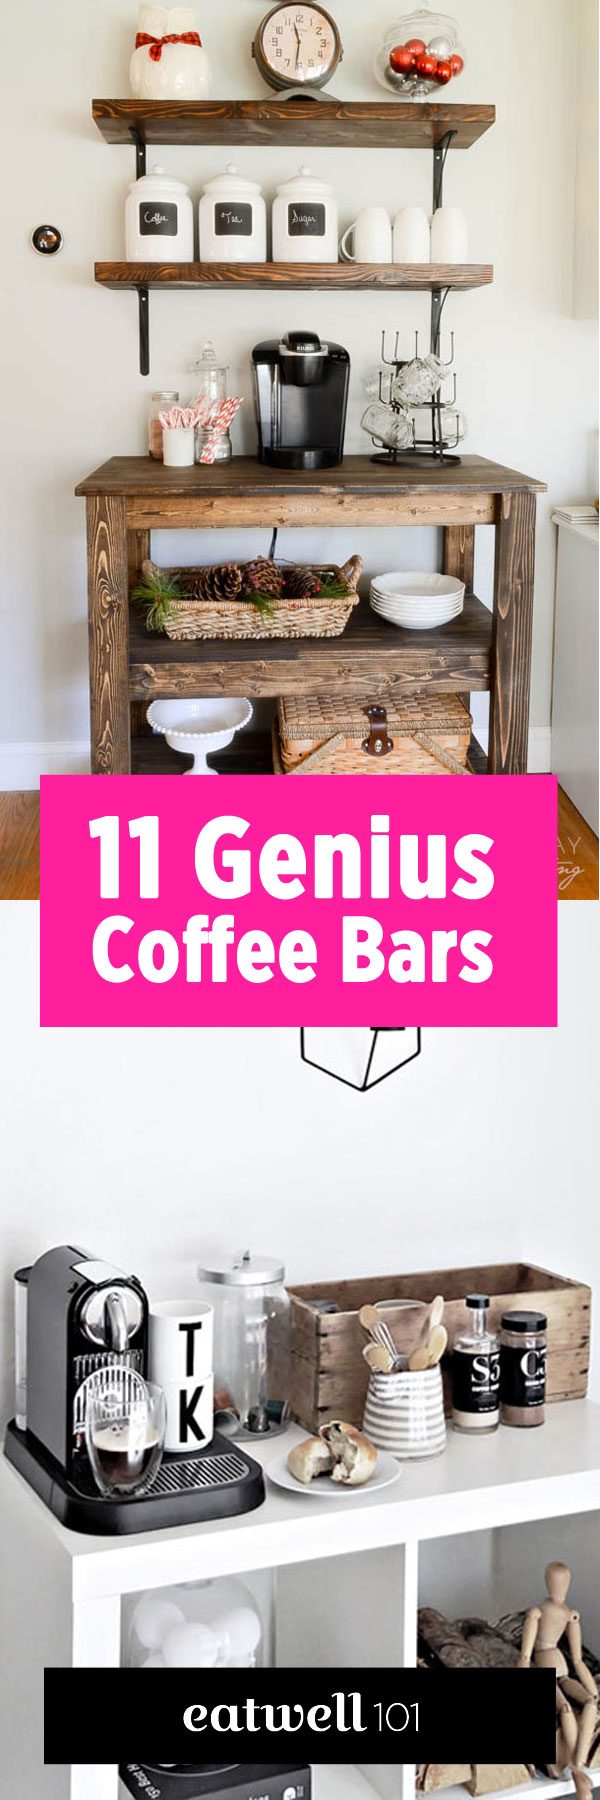 Creating a Home Coffee Bar - Cafe Appliances